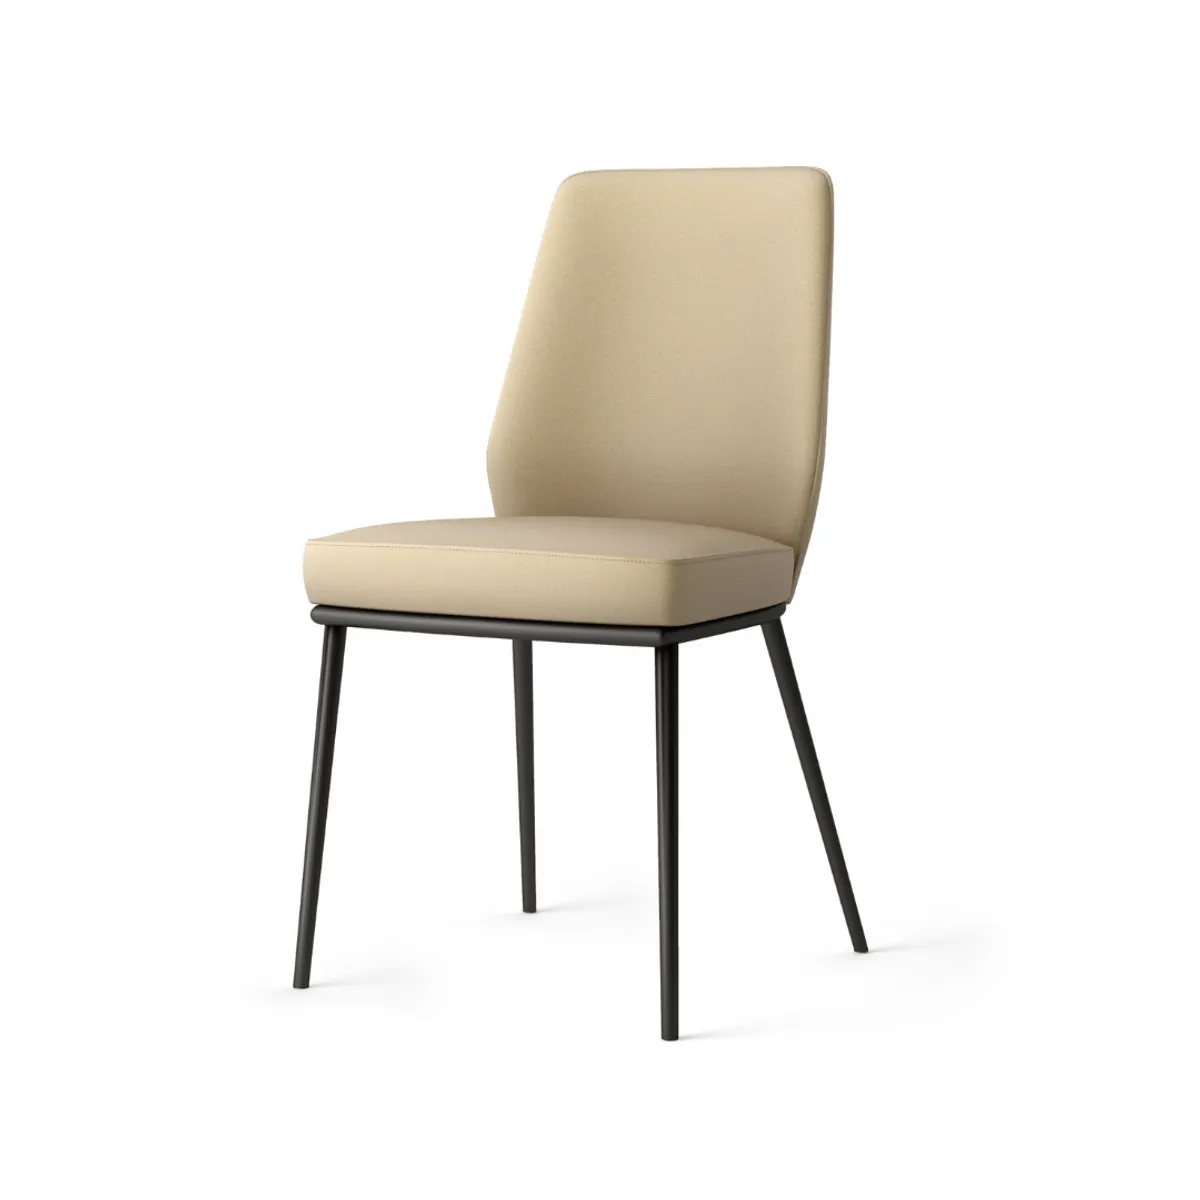 Zara side chair metal finish